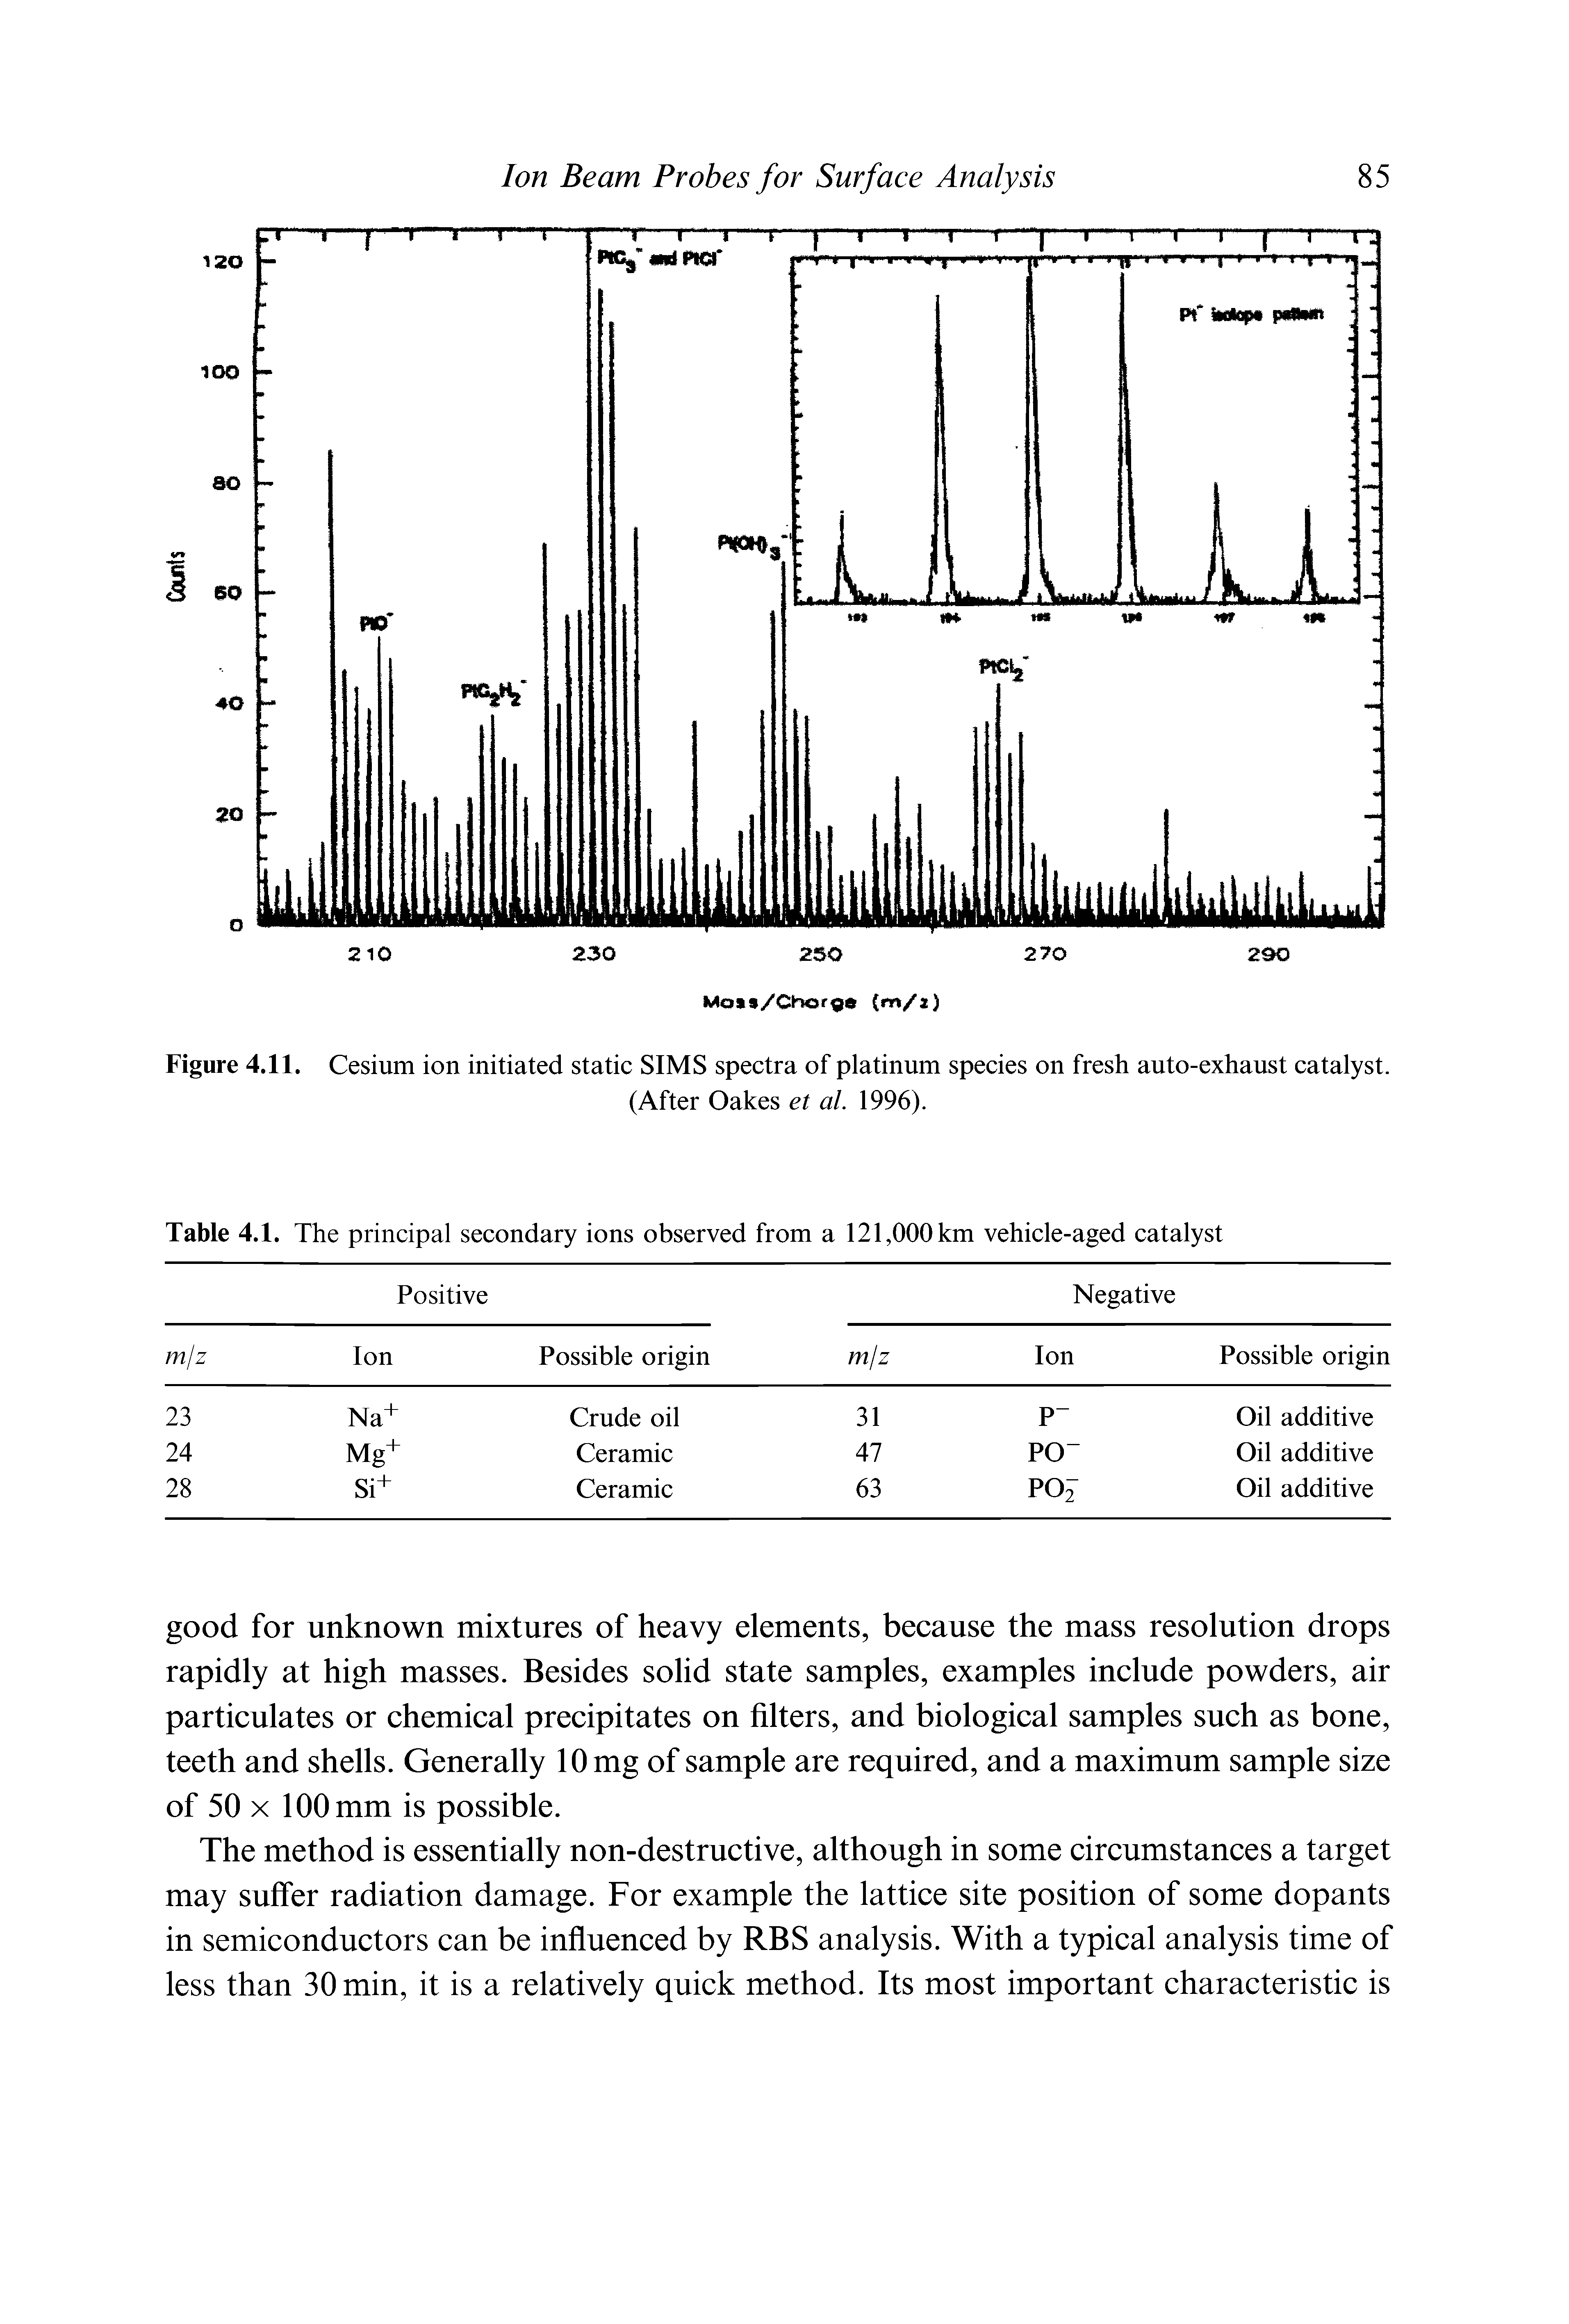 Figure 4.11. Cesium ion initiated static SIMS spectra of platinum species on fresh auto-exhaust catalyst.